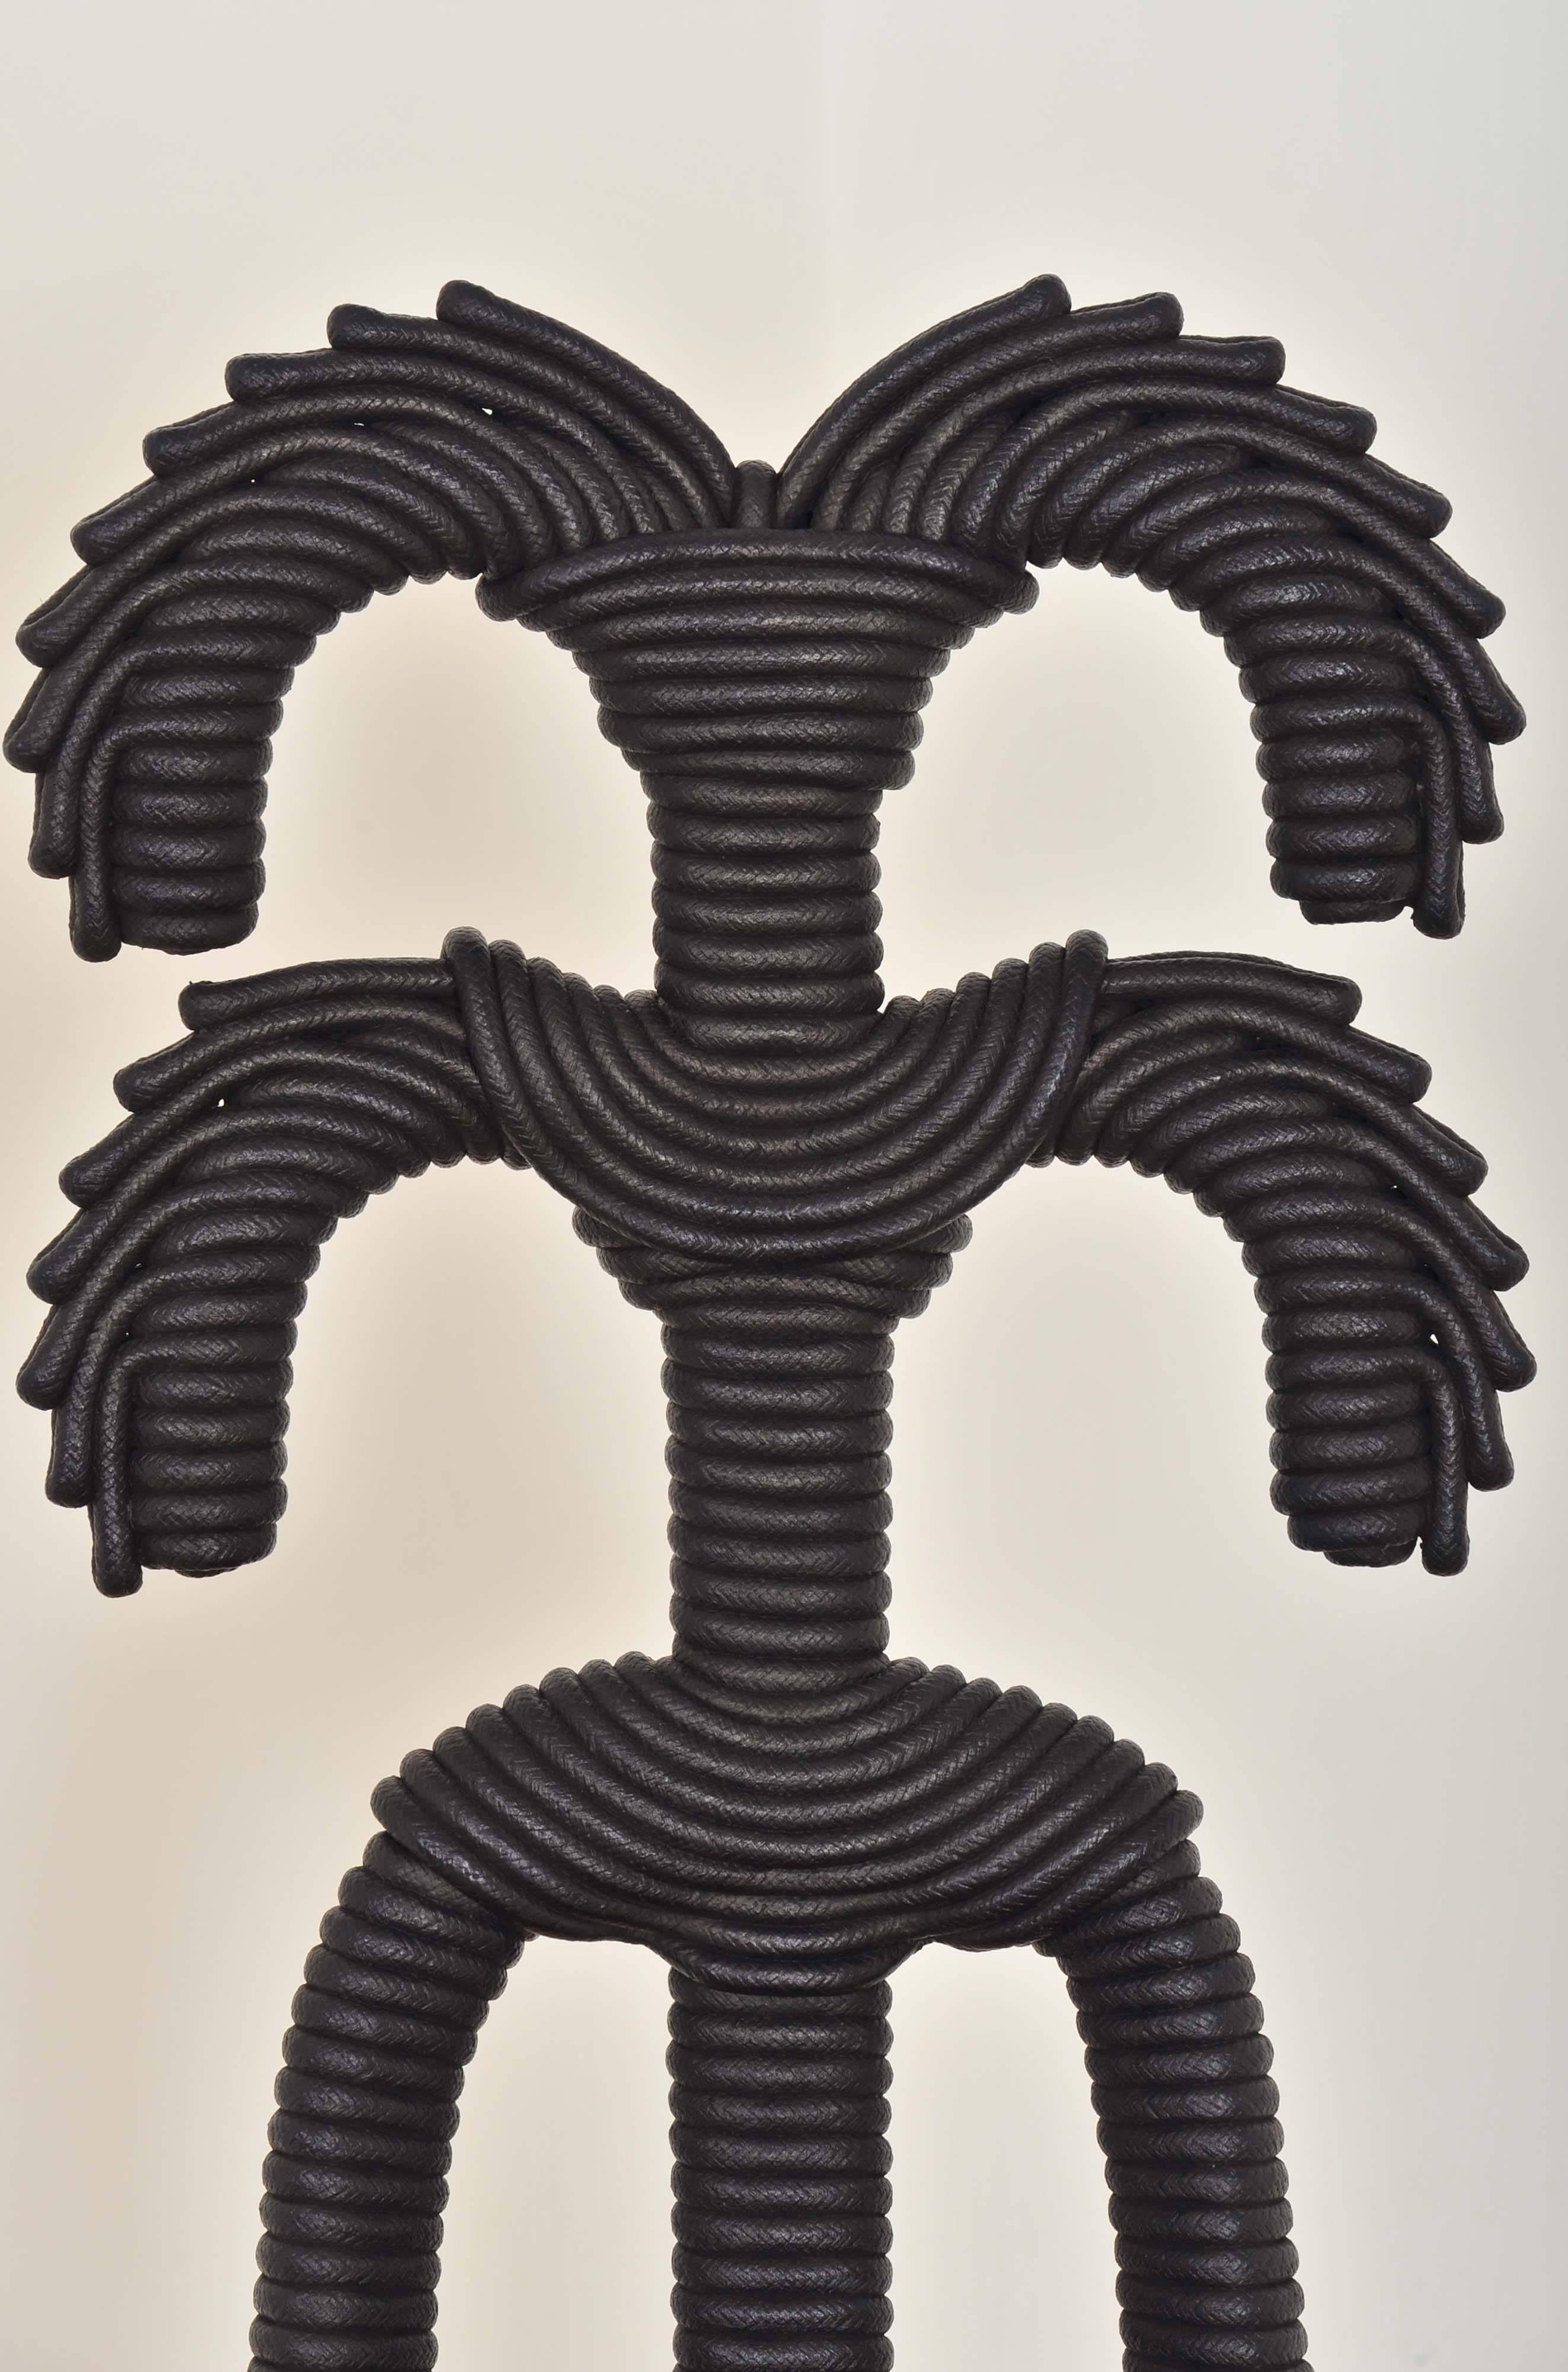 Rope 'Moisart' Chair by Christian Astuguevieille